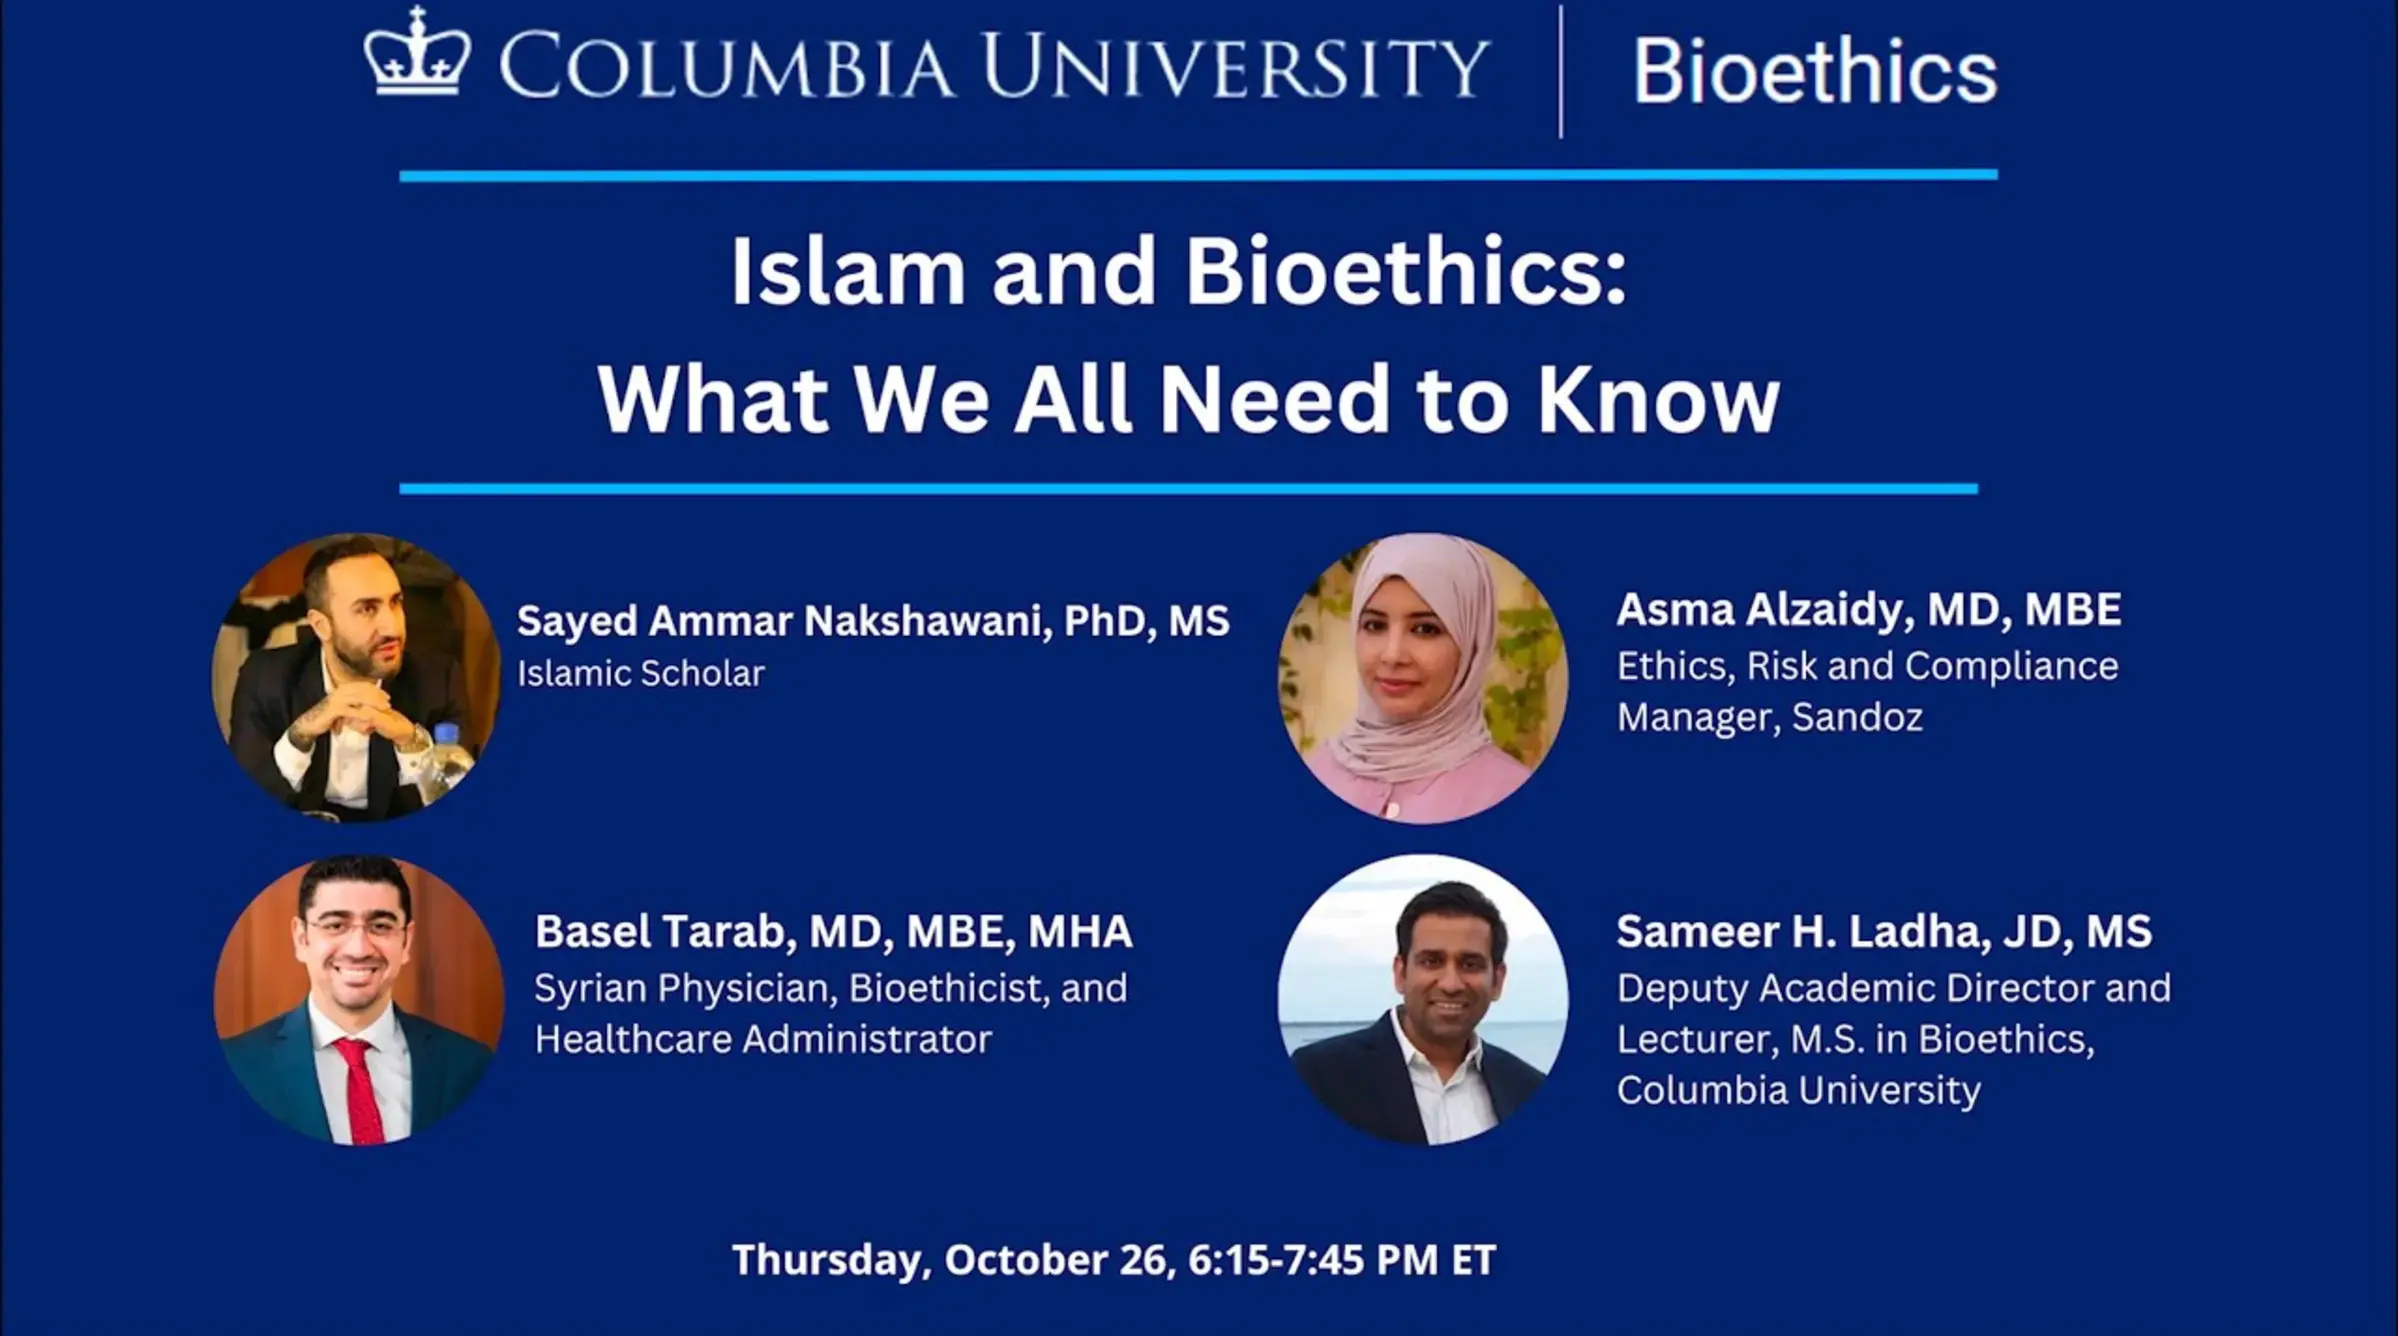 Islam and Bioethics